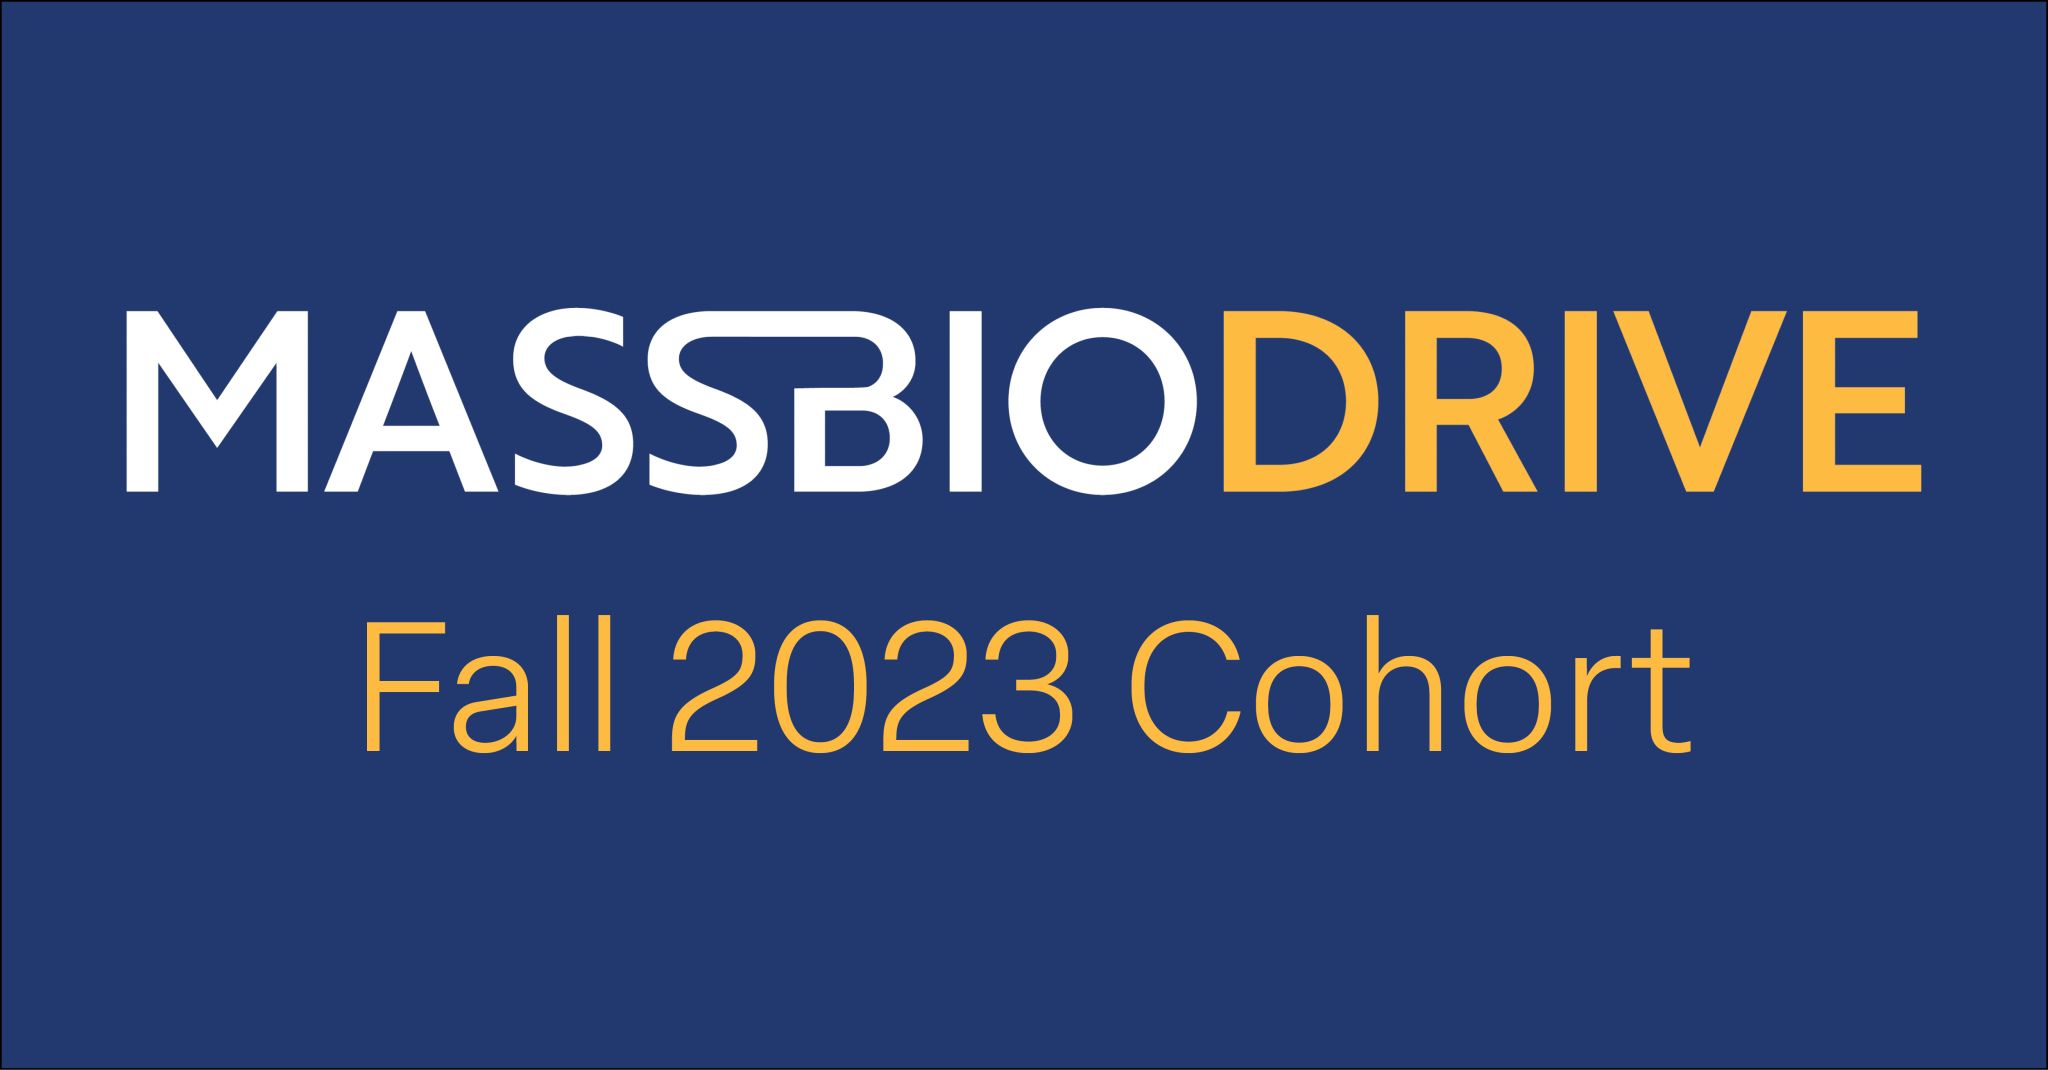 Cloverleaf chosen to participate in MassBioDrive’s Fall 2023 Cohort